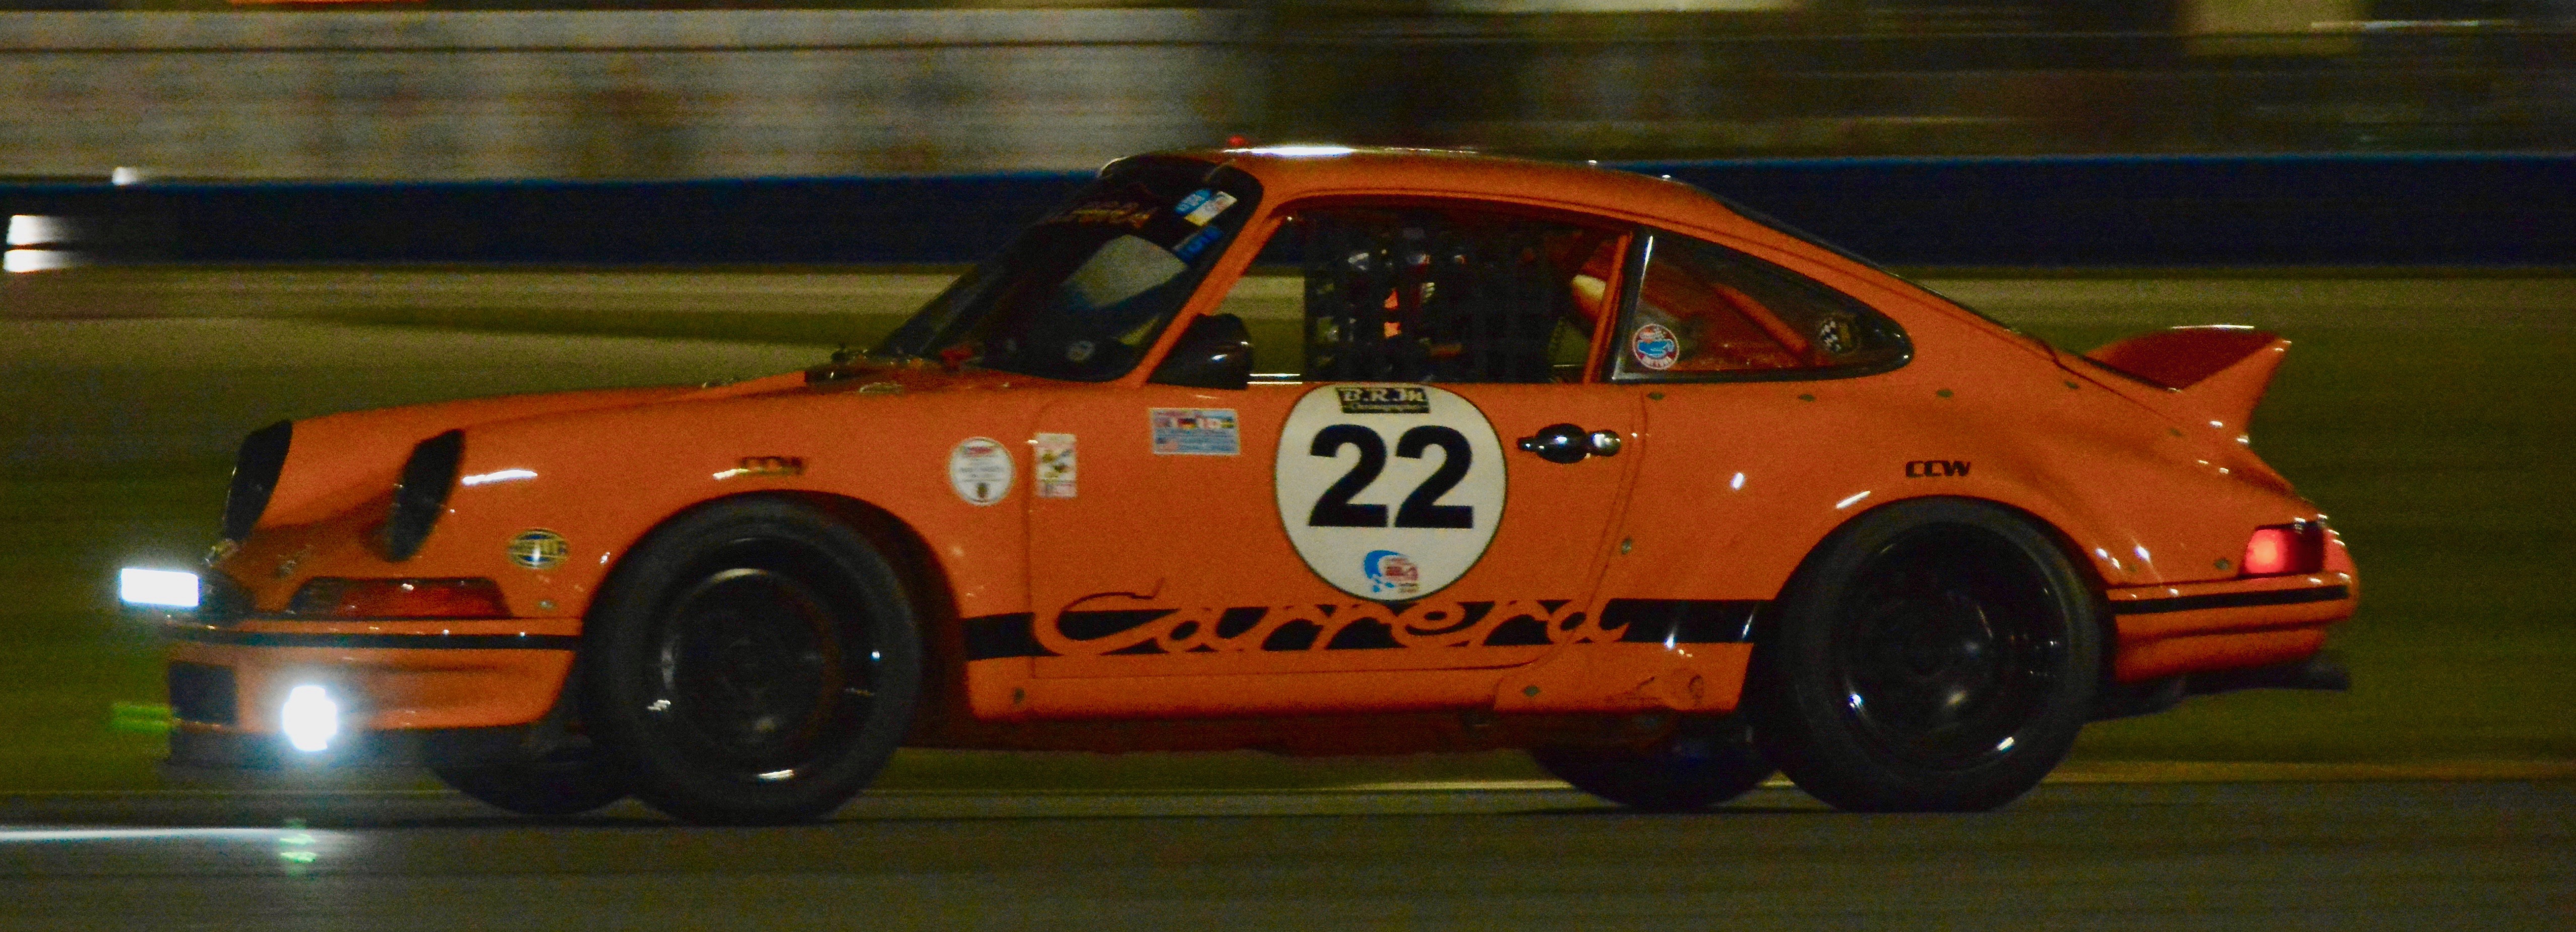 Daytona vintage race cars shine bright in the dark of night | ClassicCars 